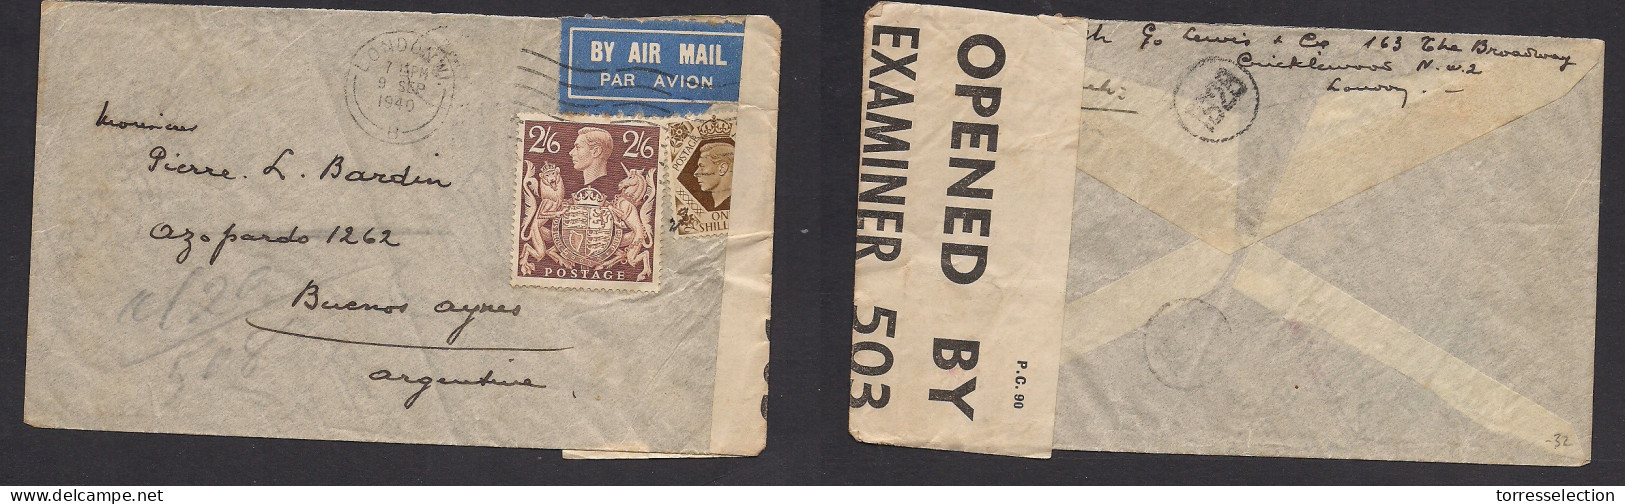 Great Britain - XX. 1940 (6 Sept) London - Argentina, Buenos Aires. Air Multifkd Env Incl 2/6sh. 3sh 6d Rate + Censored. - ...-1840 Vorläufer